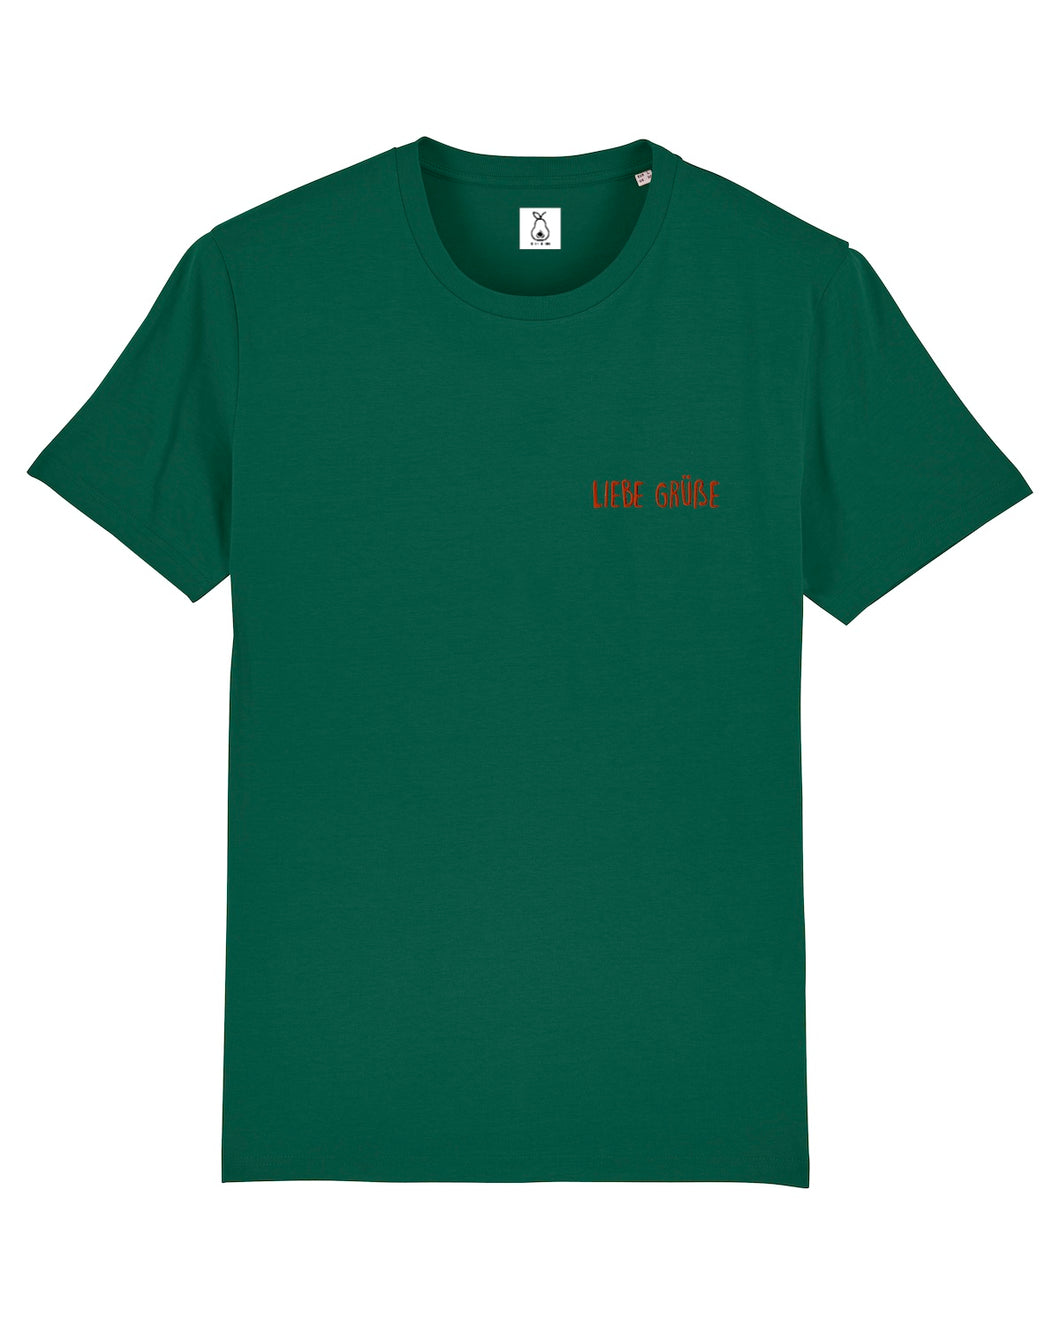 Liebe Grüße - T-Shirt - Green